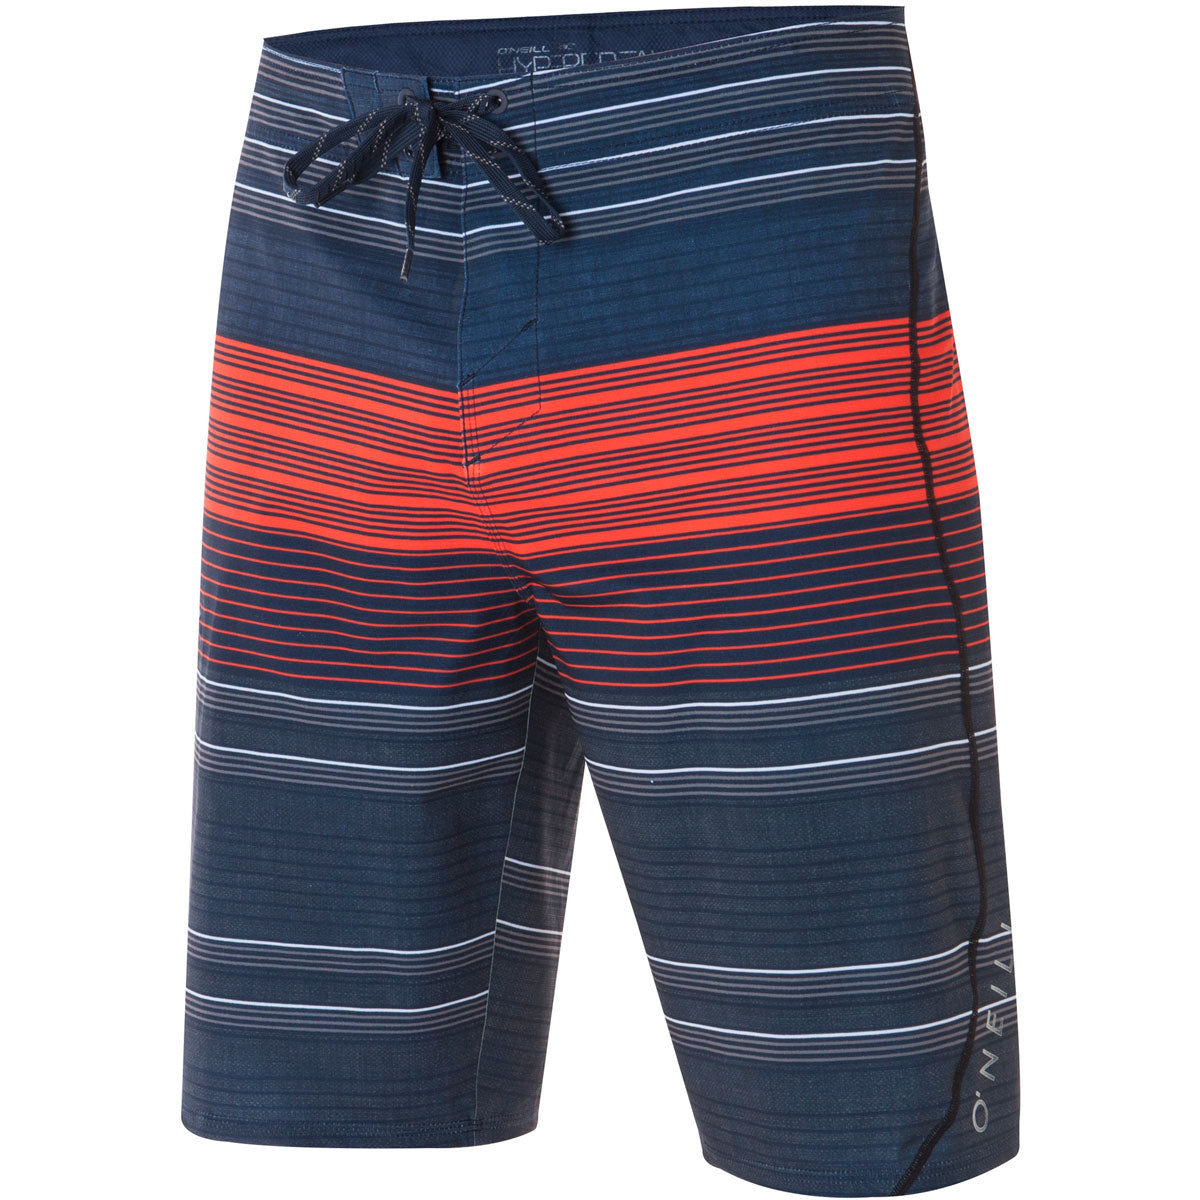 O'Neill Stripe Freak Men's Boardshort Shorts - Navy